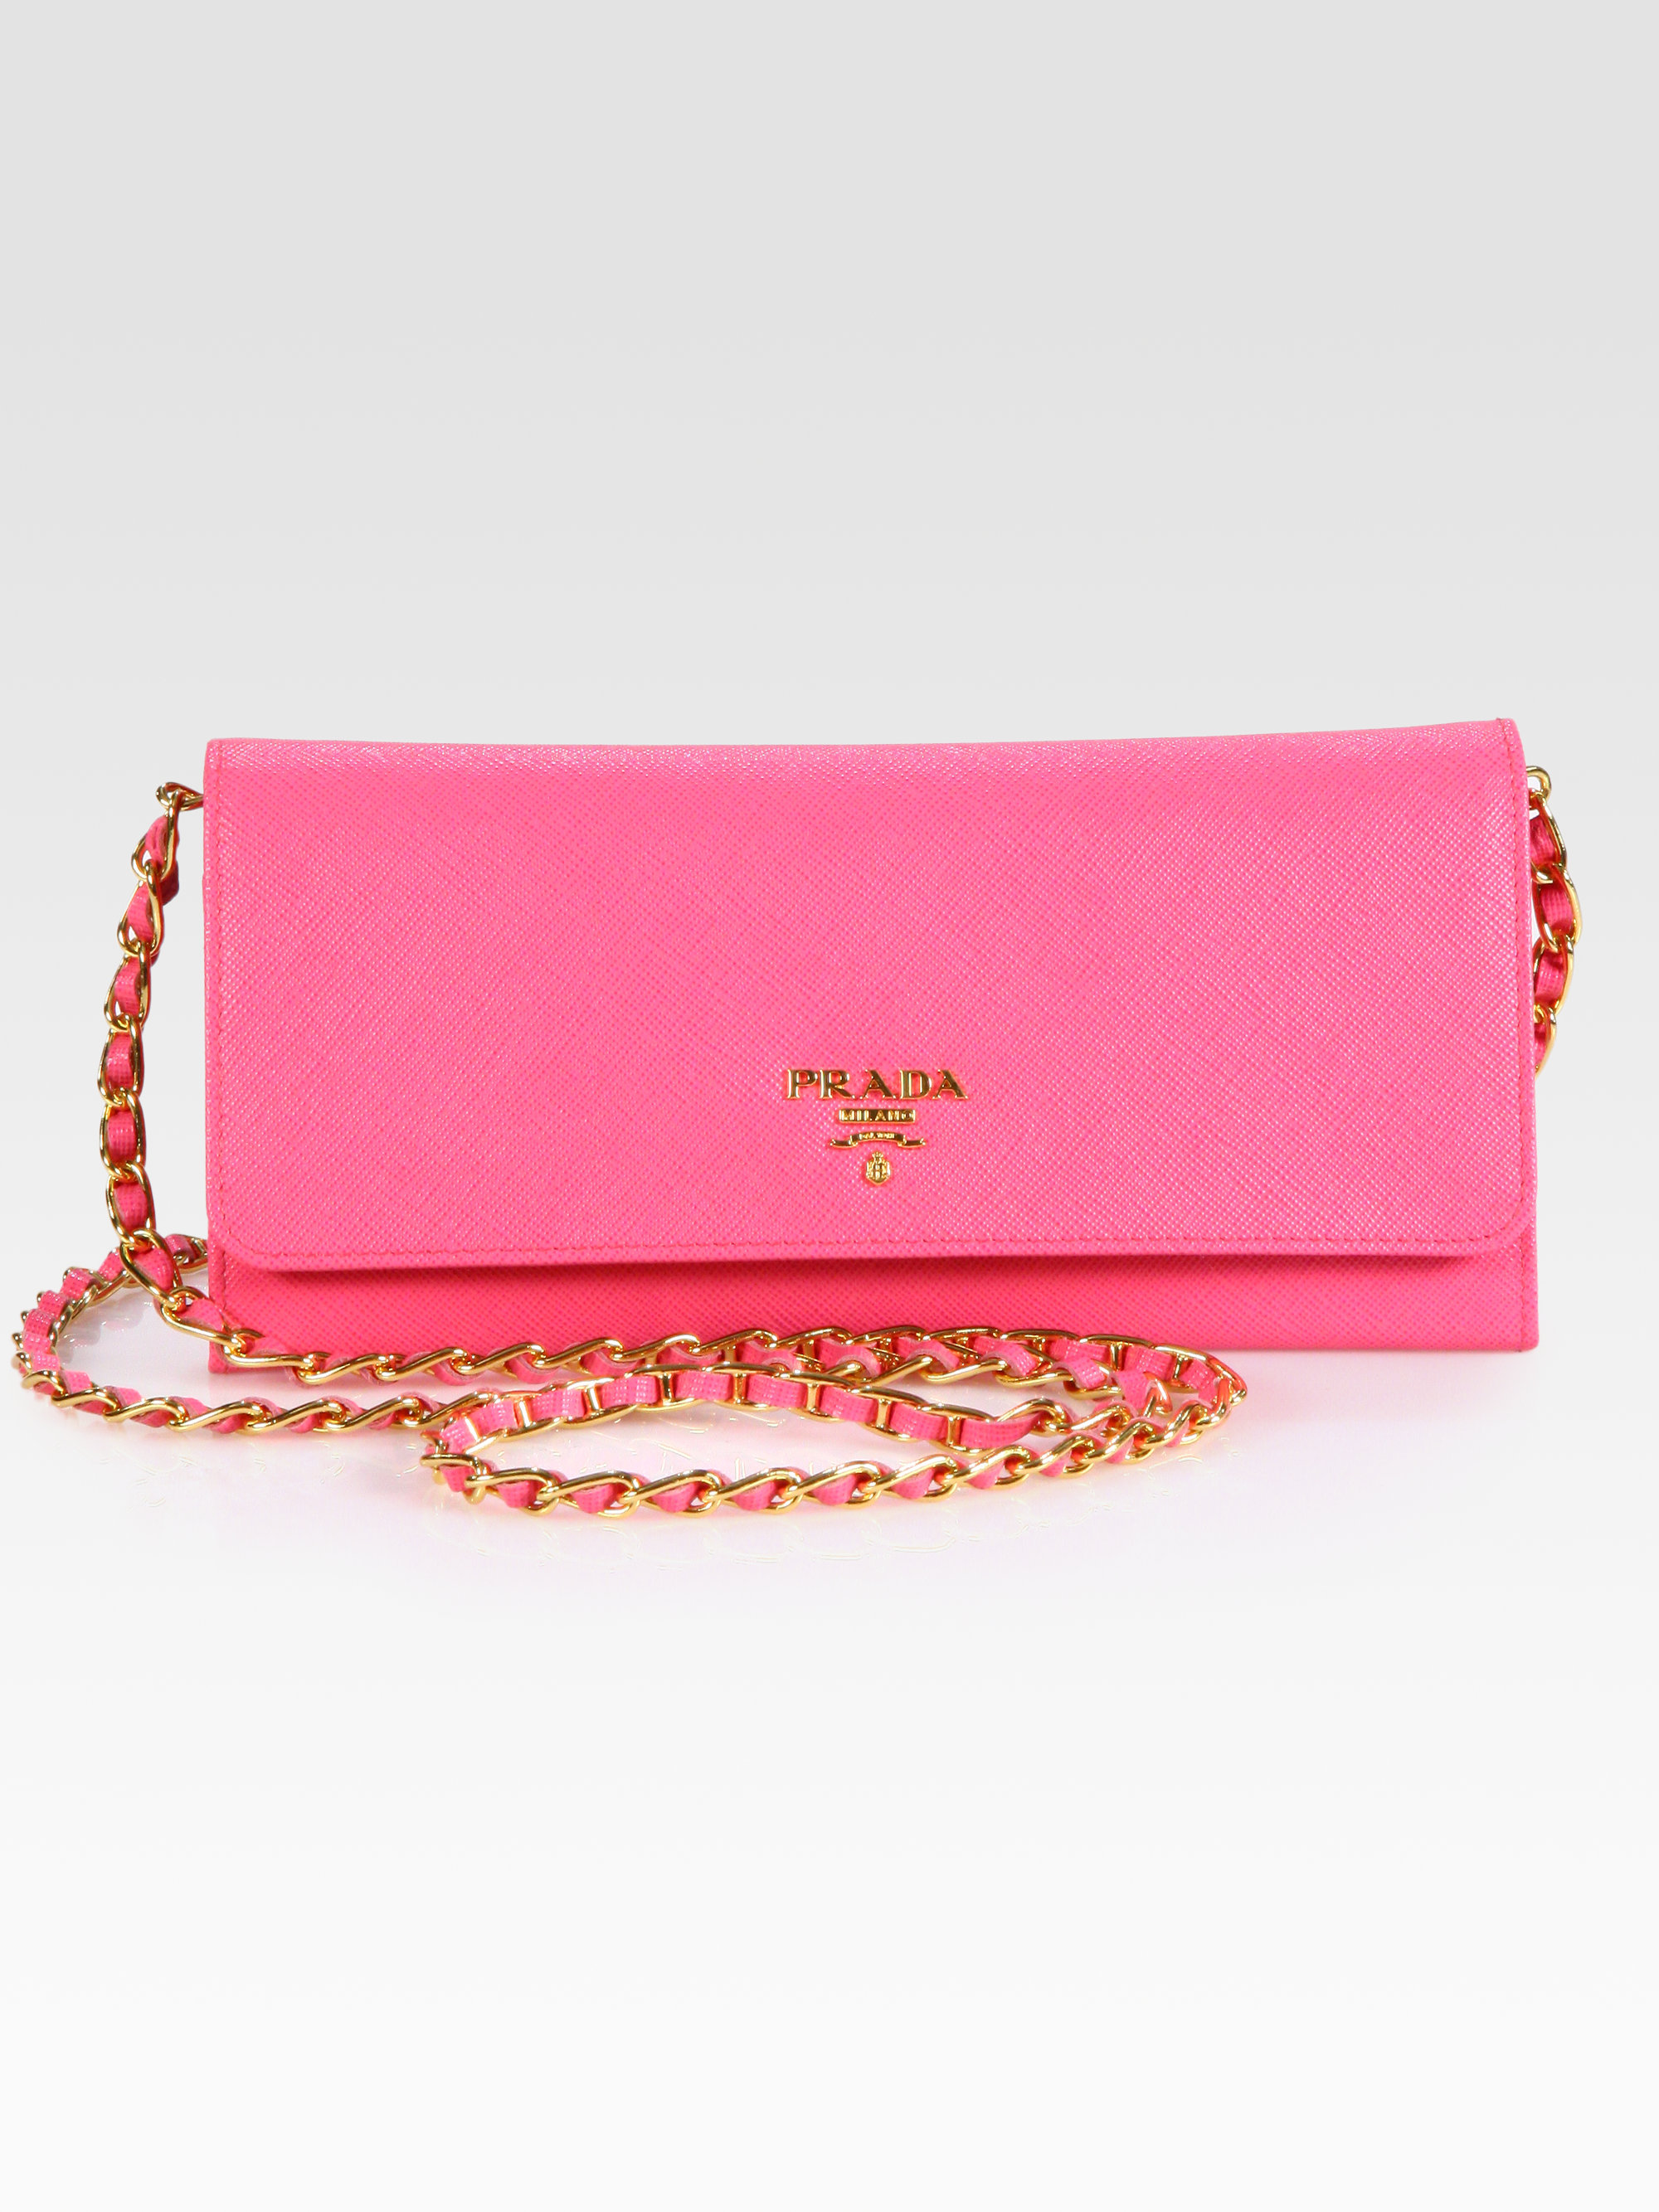 prada nylon black bag - Prada Saffiano Metal Oro Wallet with Chain in Pink (begonia-pink ...